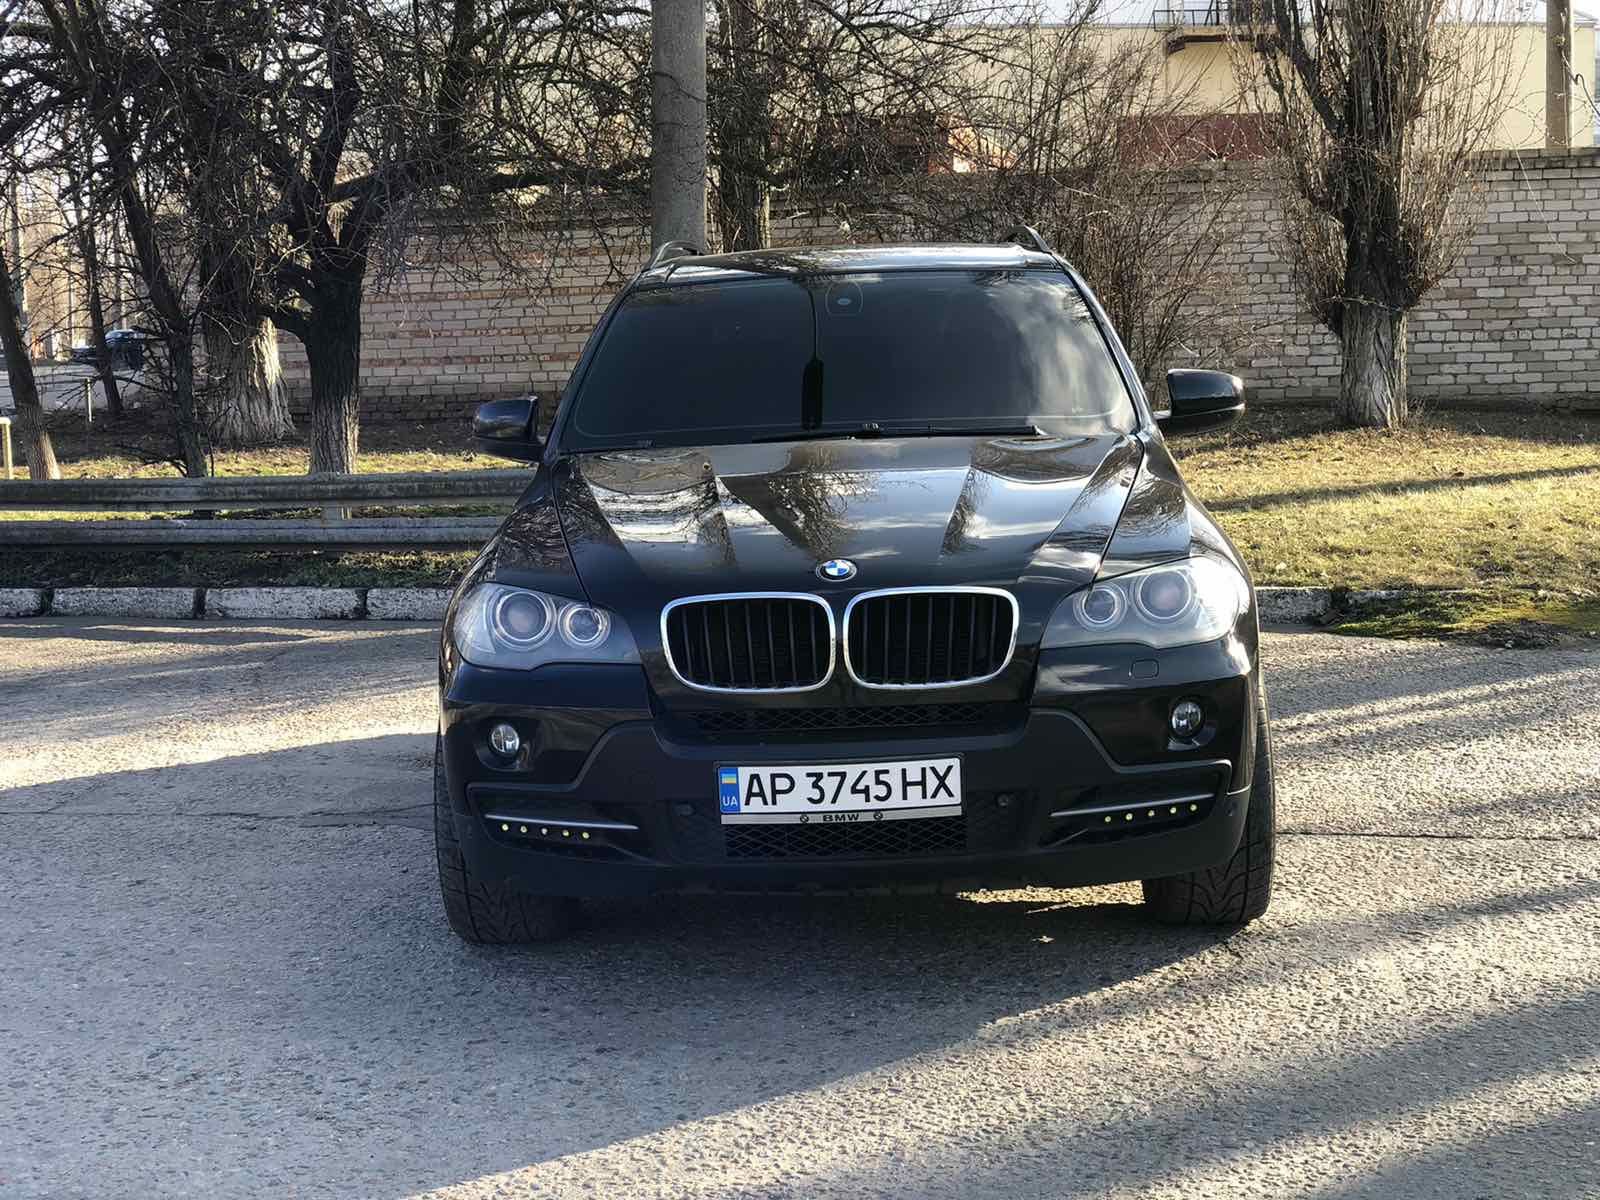 Продам БМВ BMW X5